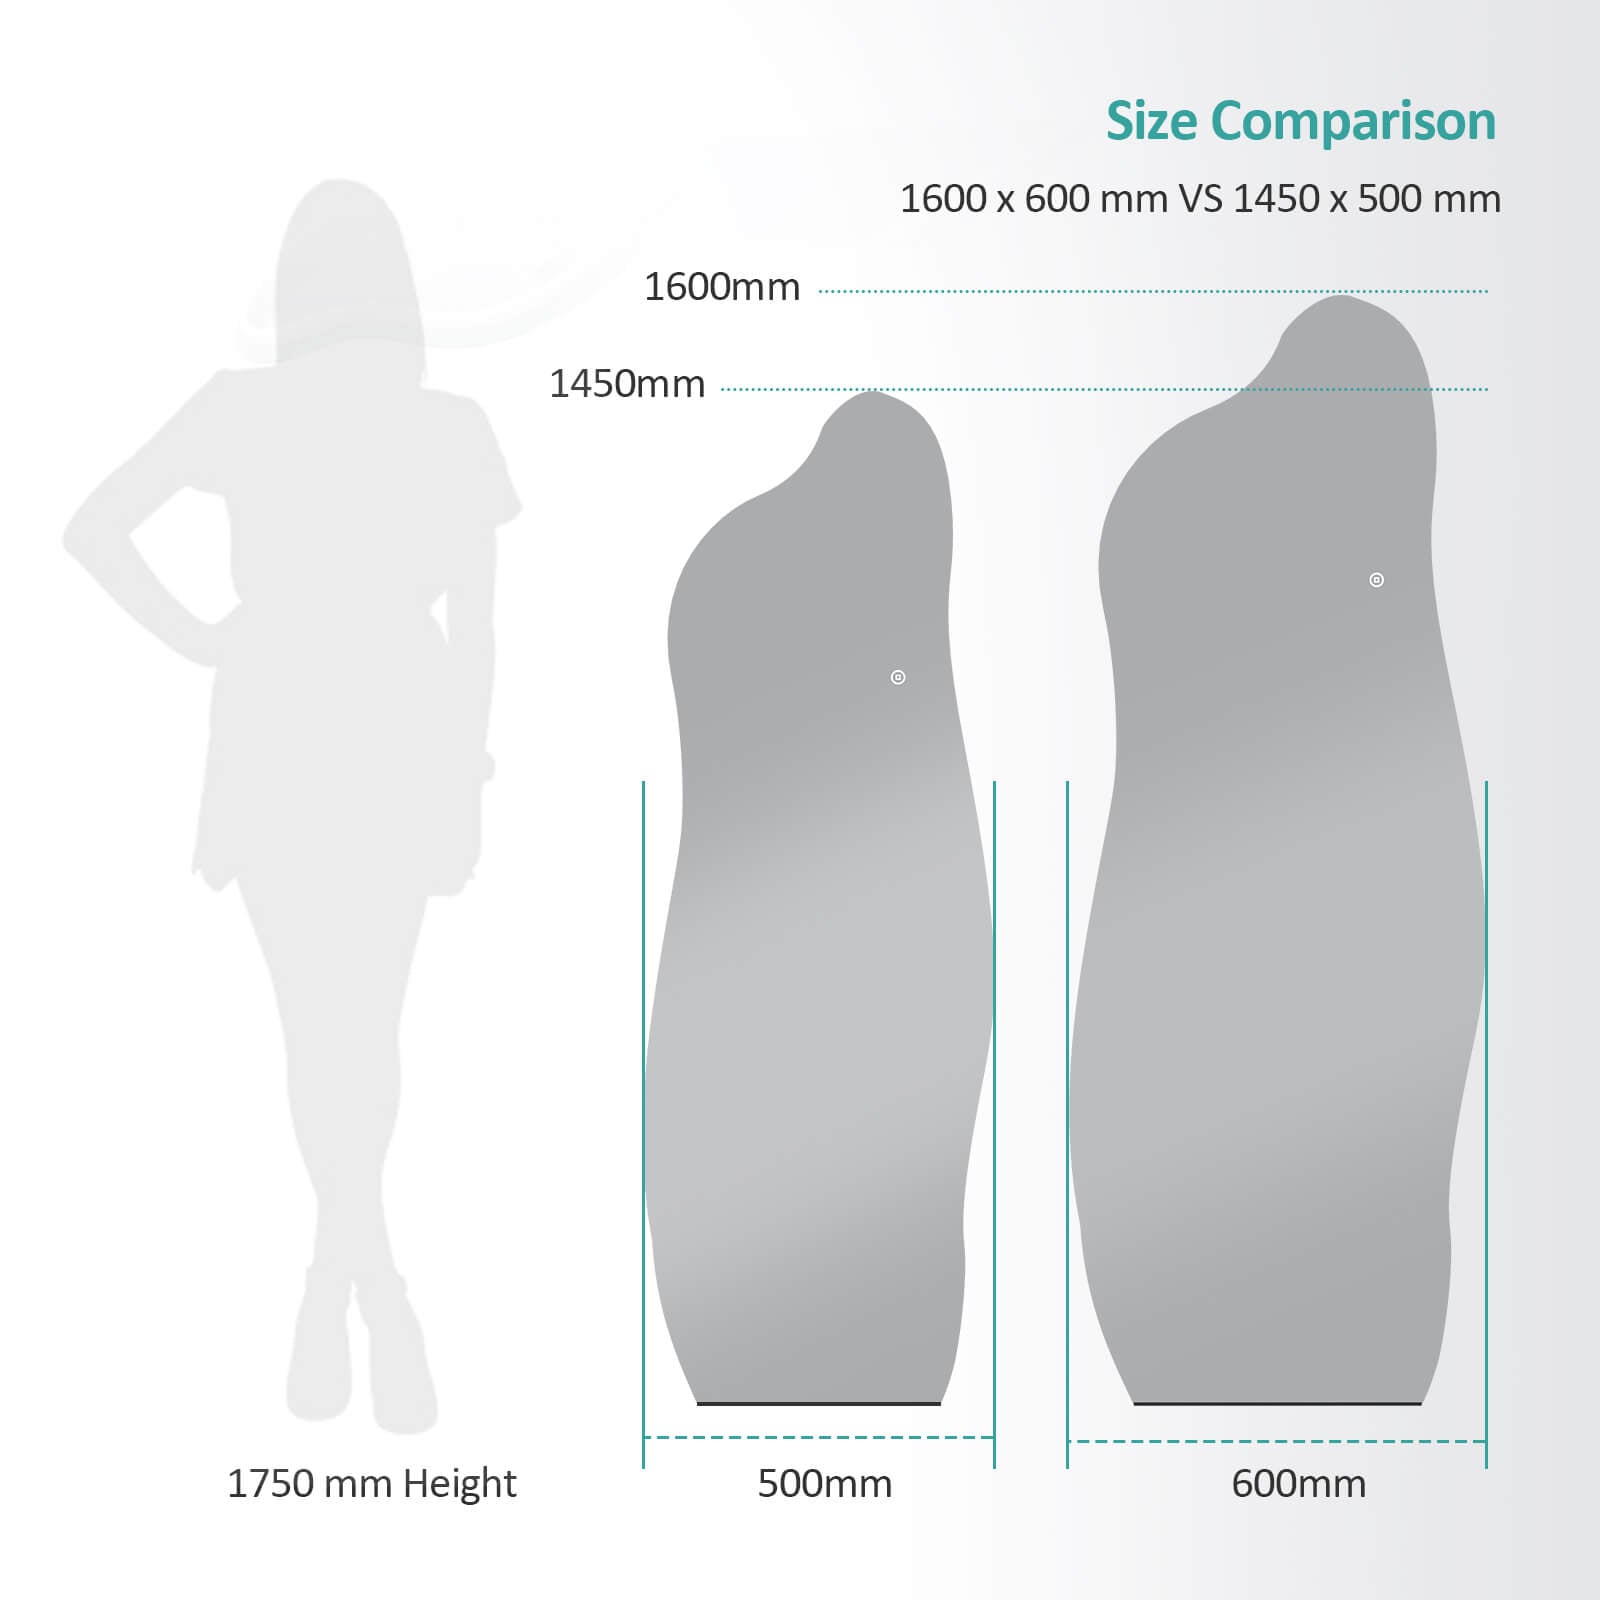 emke uk full-length mirror fm04 size comparison